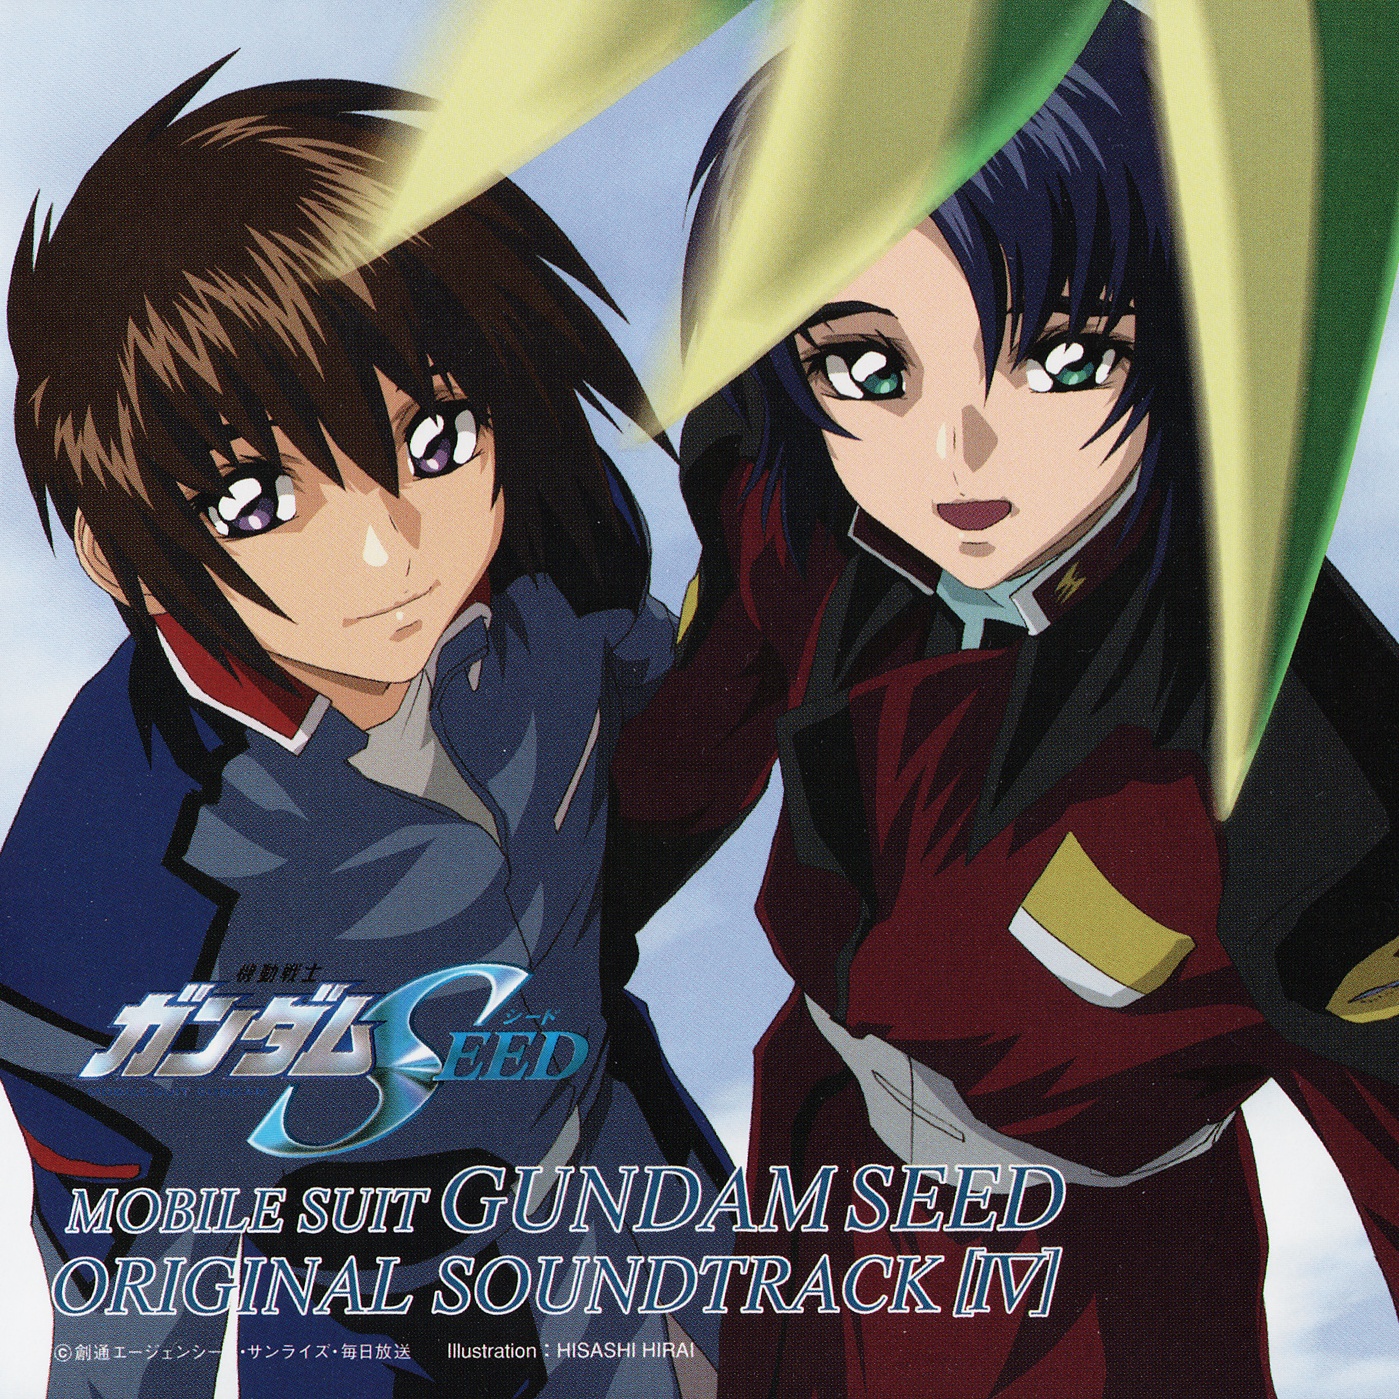 River Gundam Seed Version Lyrics Follow Lyrics